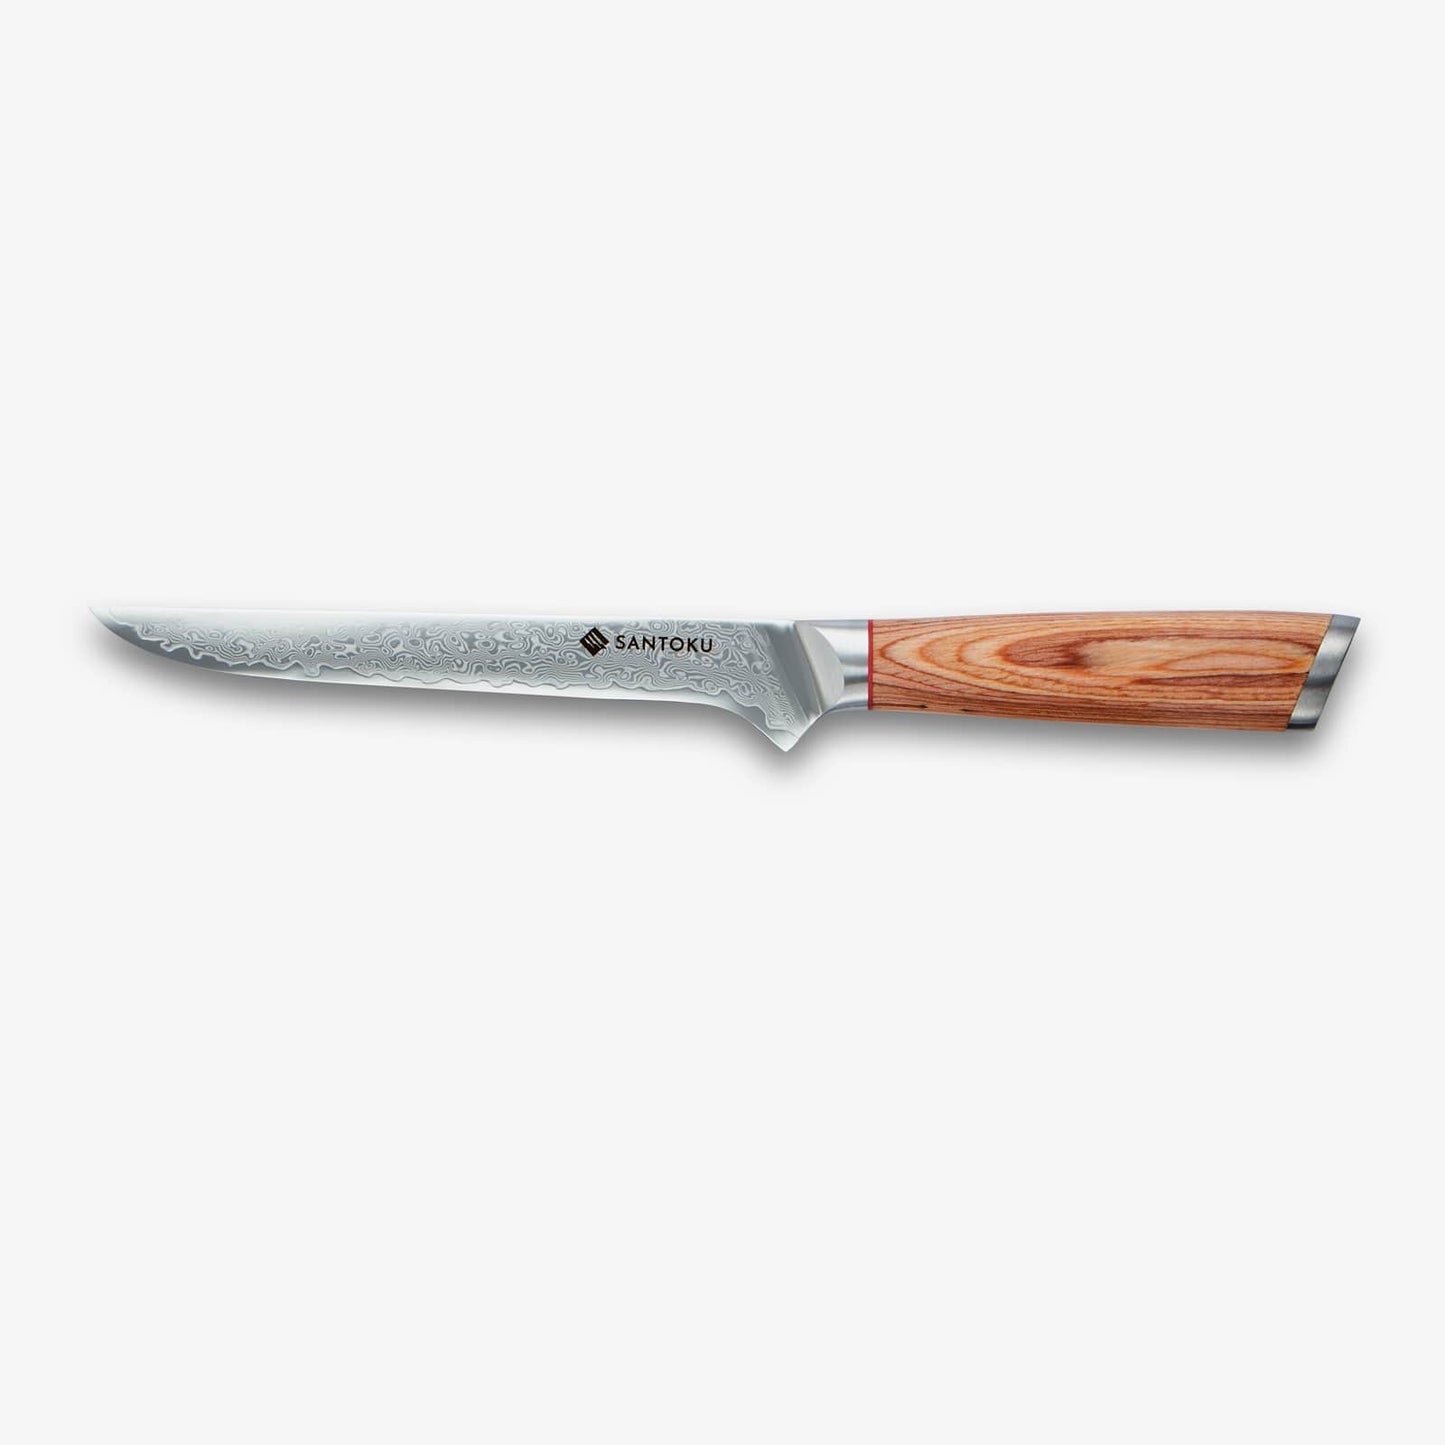 हरुता (はる た た) 6 इंच बोनिंग चाकू